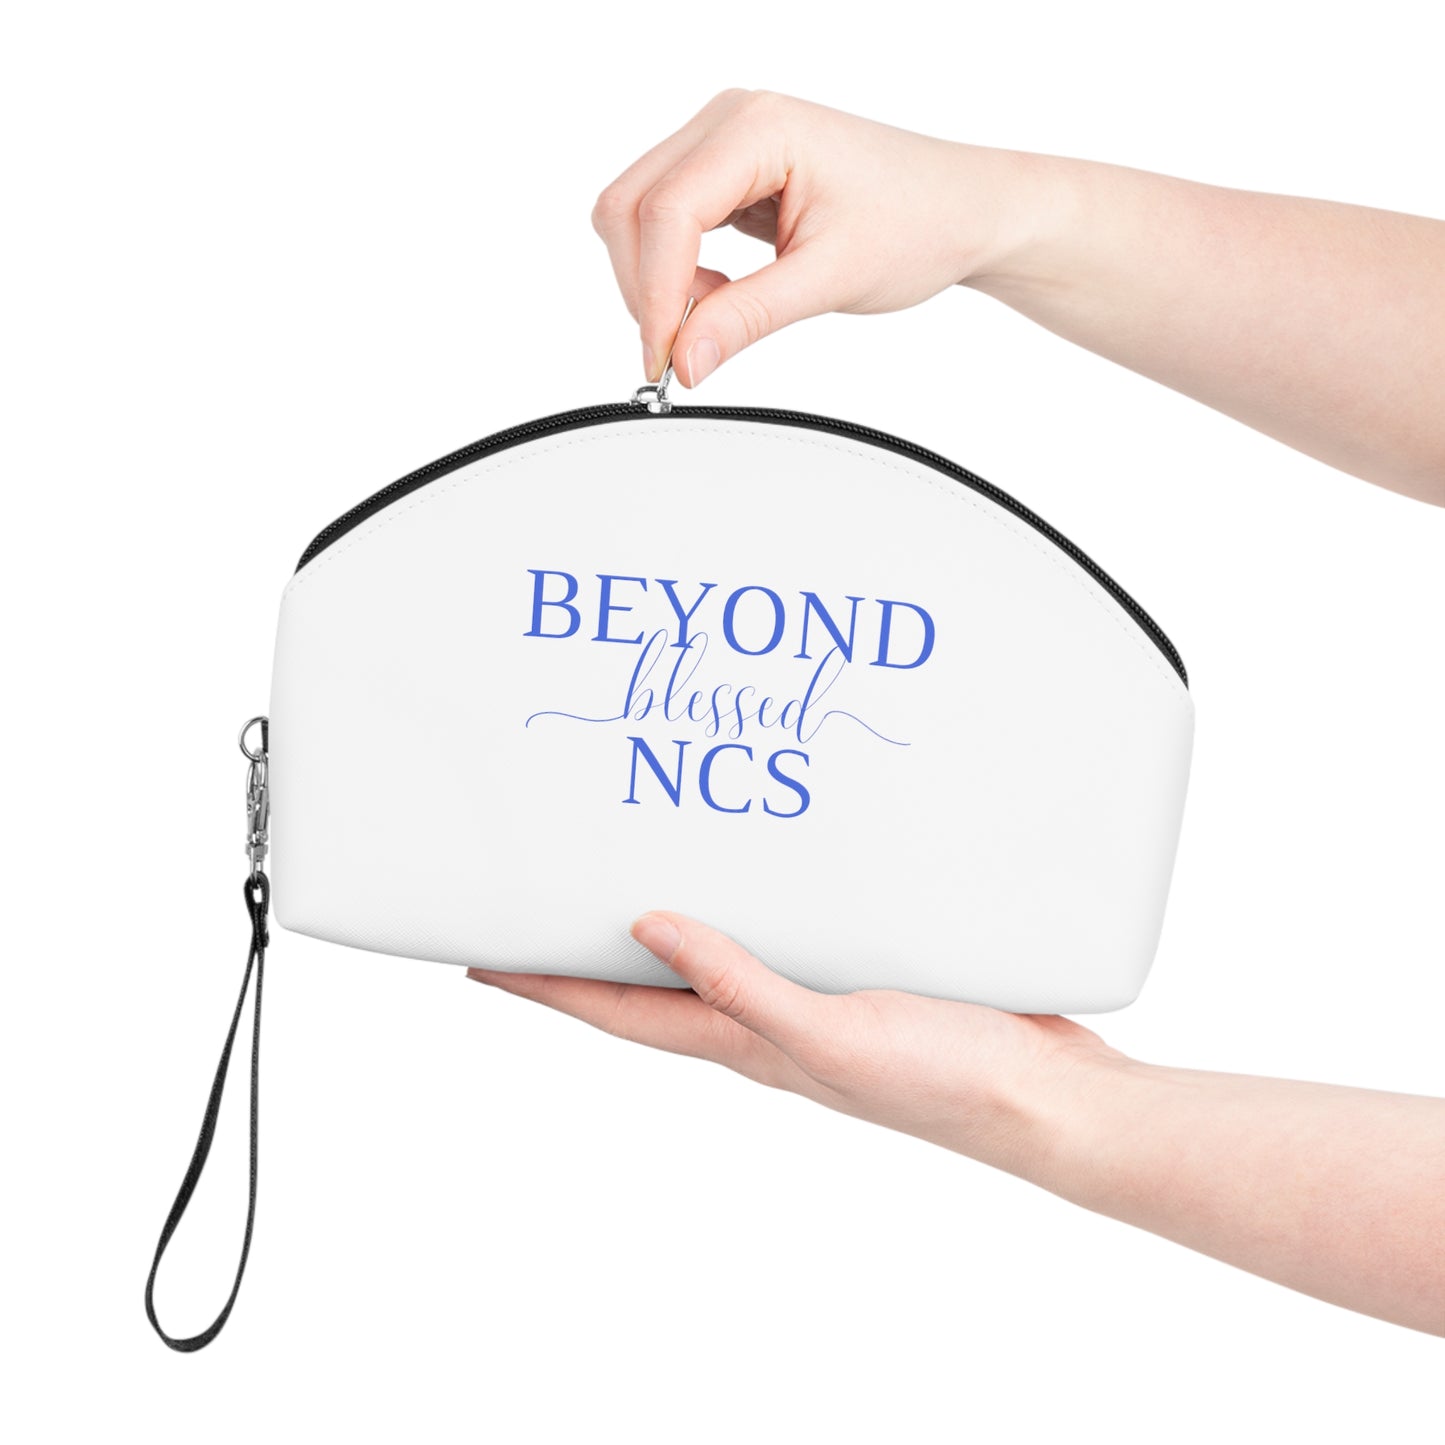 Beyond Blessed NCS - Makeup Bag - Royal Blue